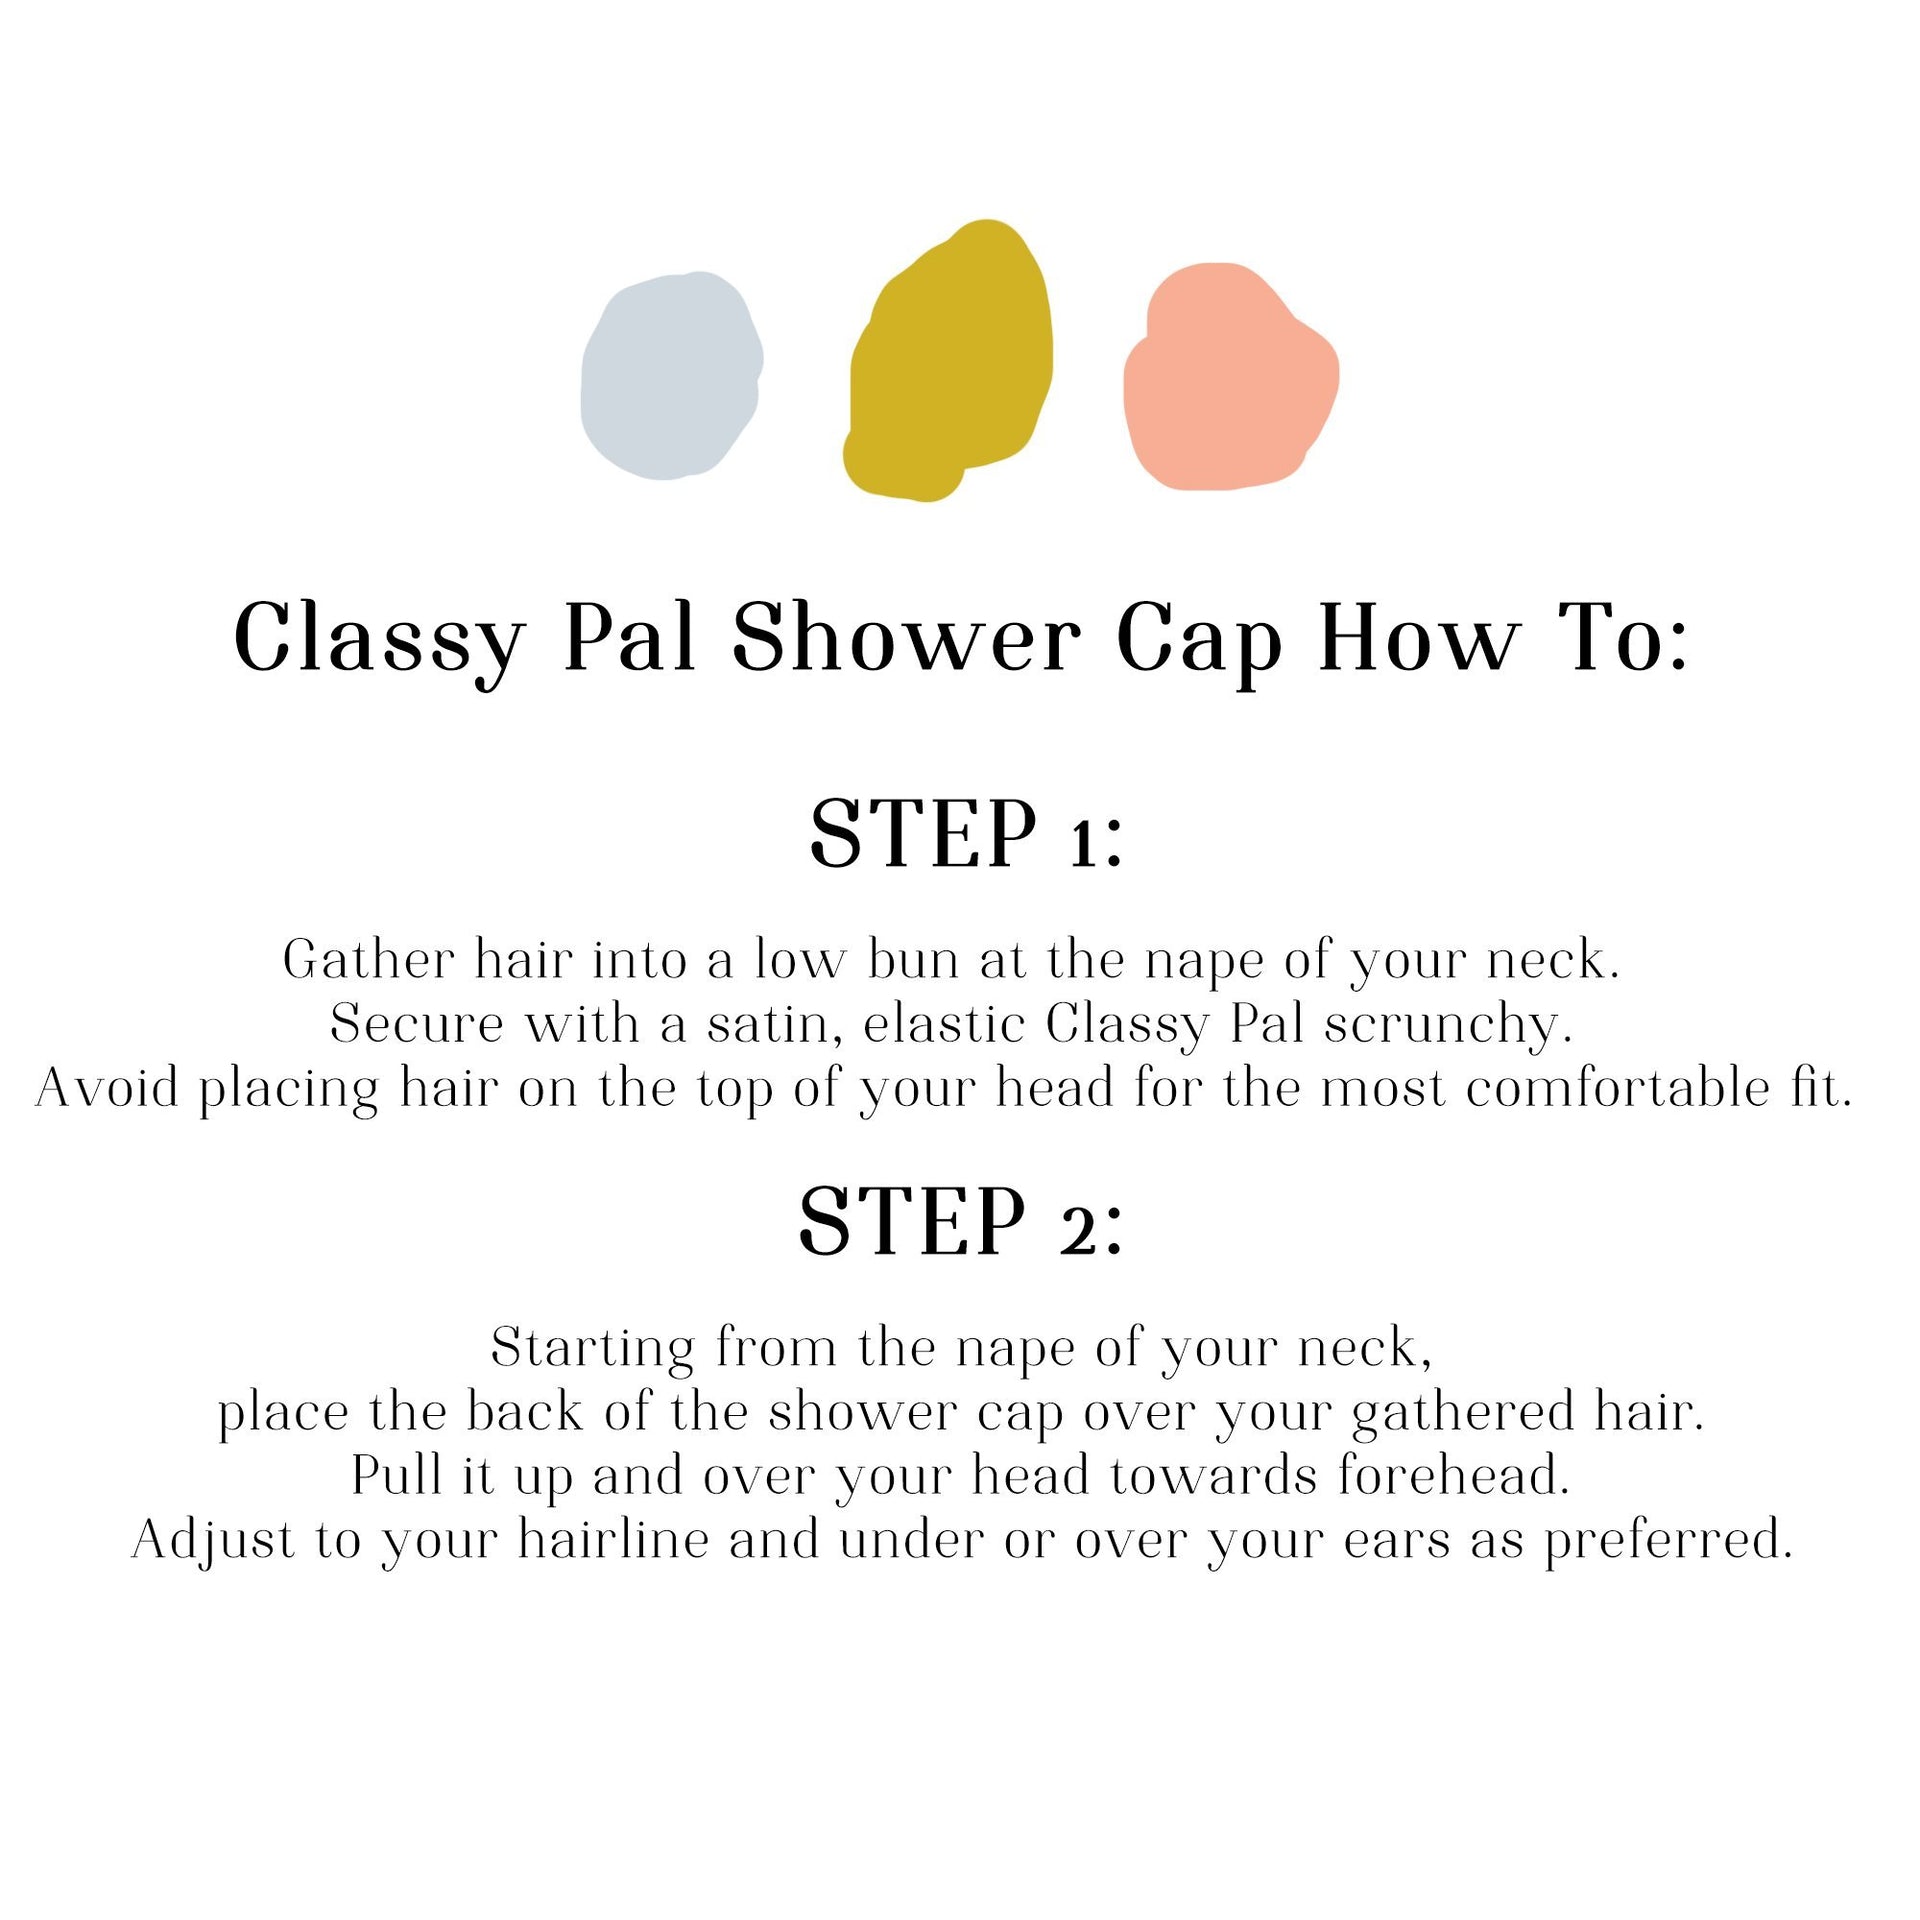 Polka Dot Shower Cap - Classy Pal Shower Cap